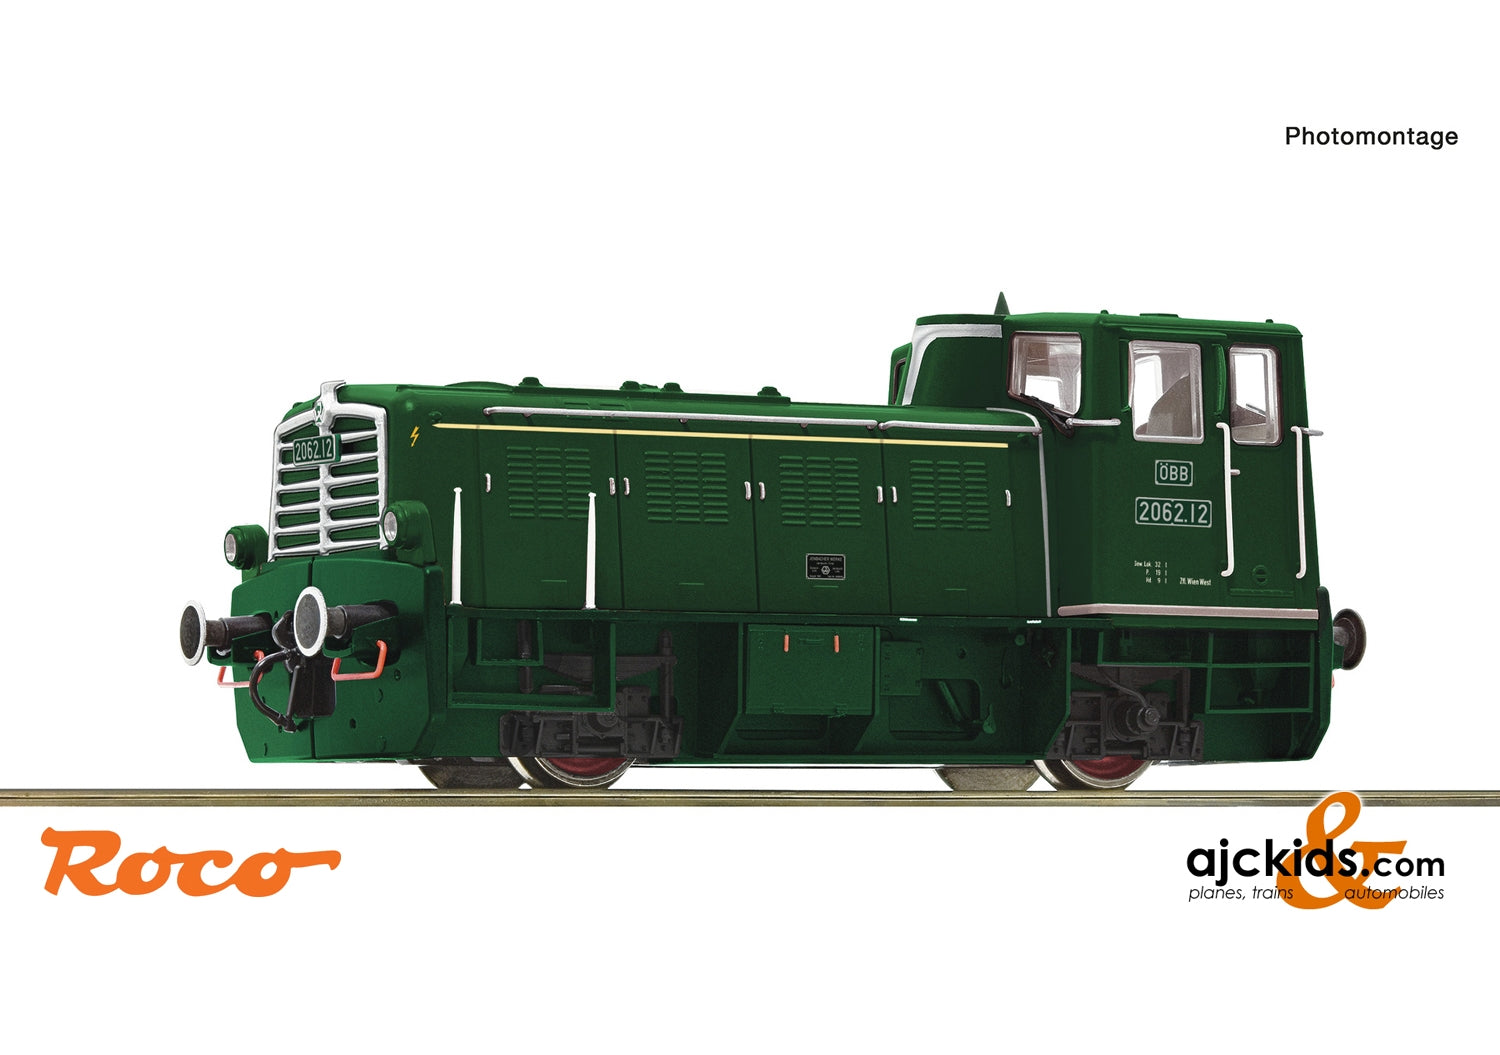 Roco 78004 - Diesel locomotive class 2062